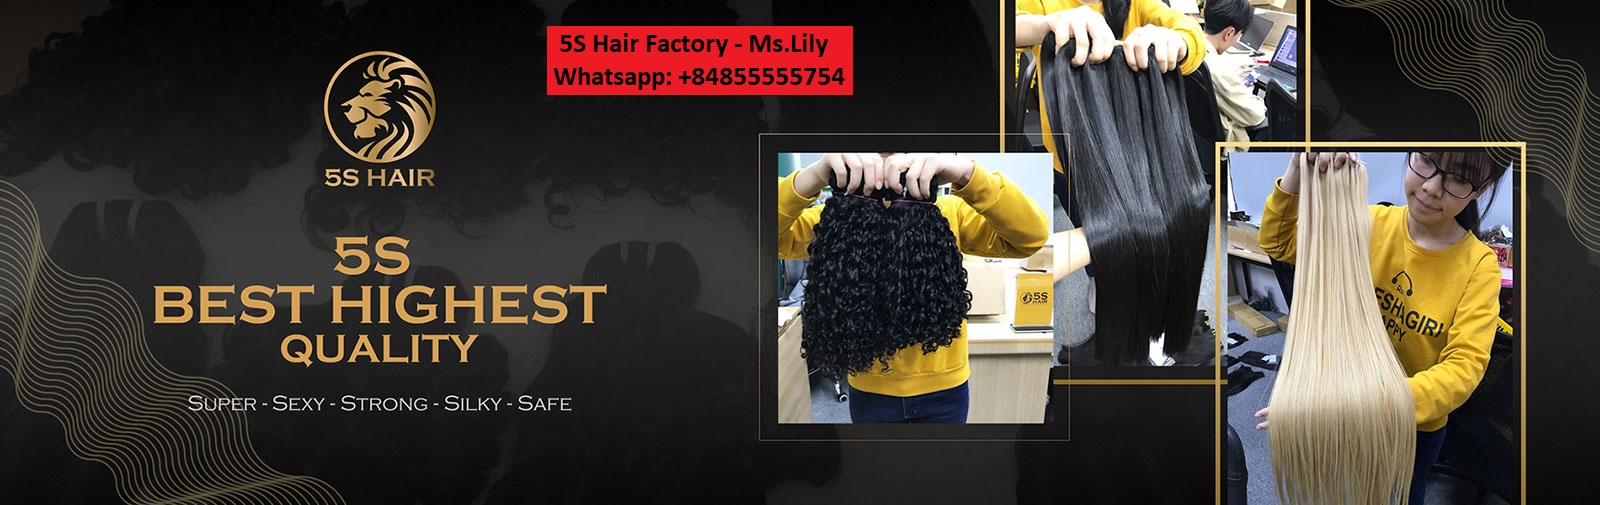 5s-hair-factory-the-best-vietnamese-hair-extensions-vendors-4